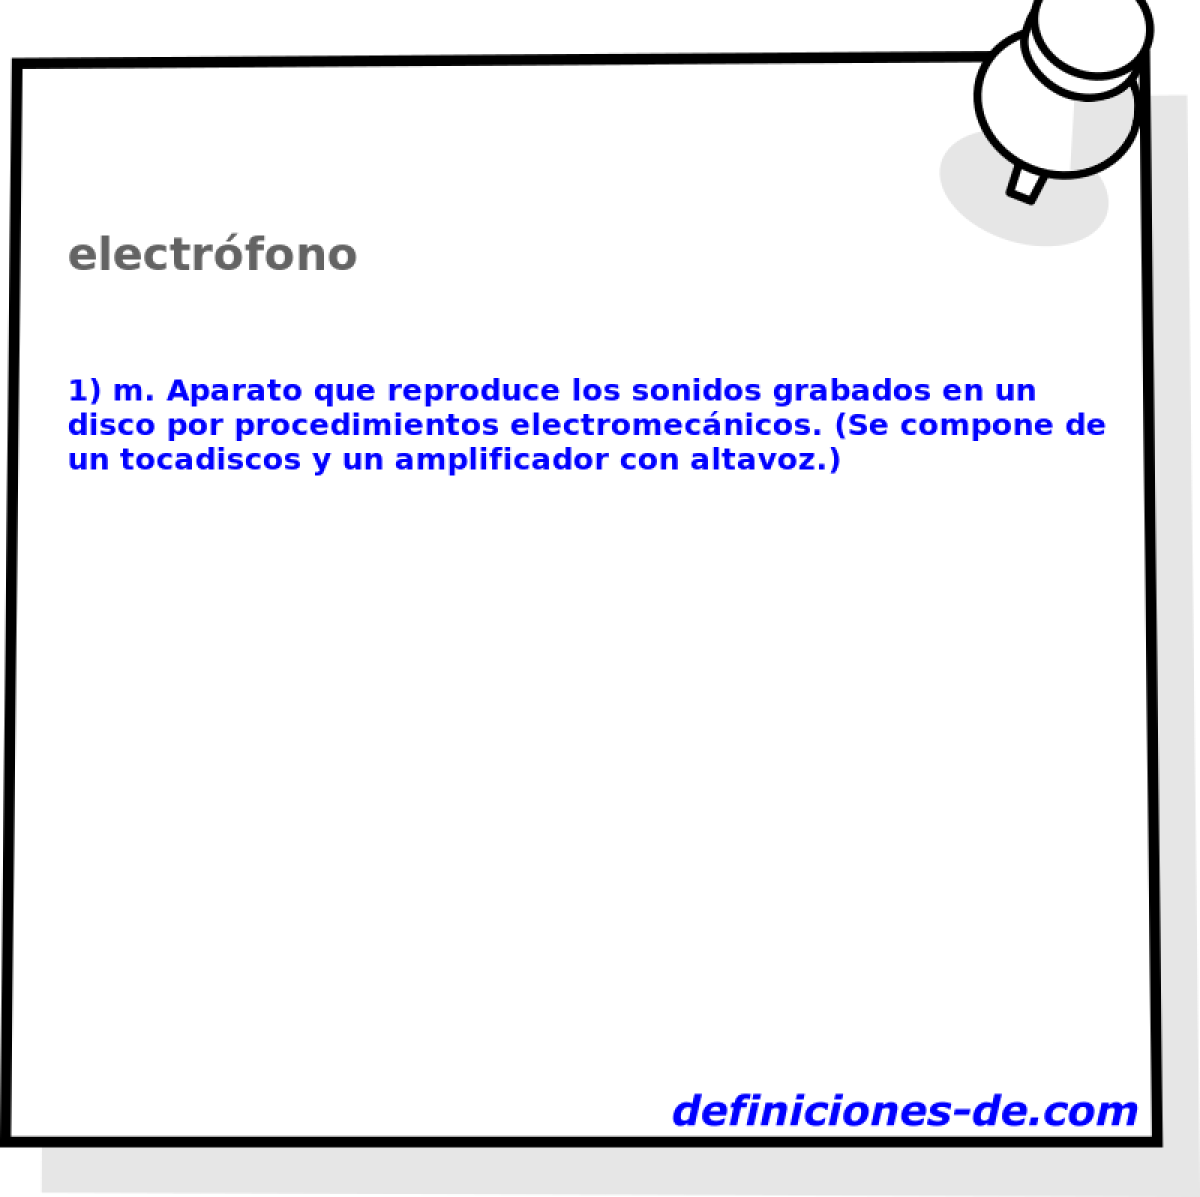 electrfono 